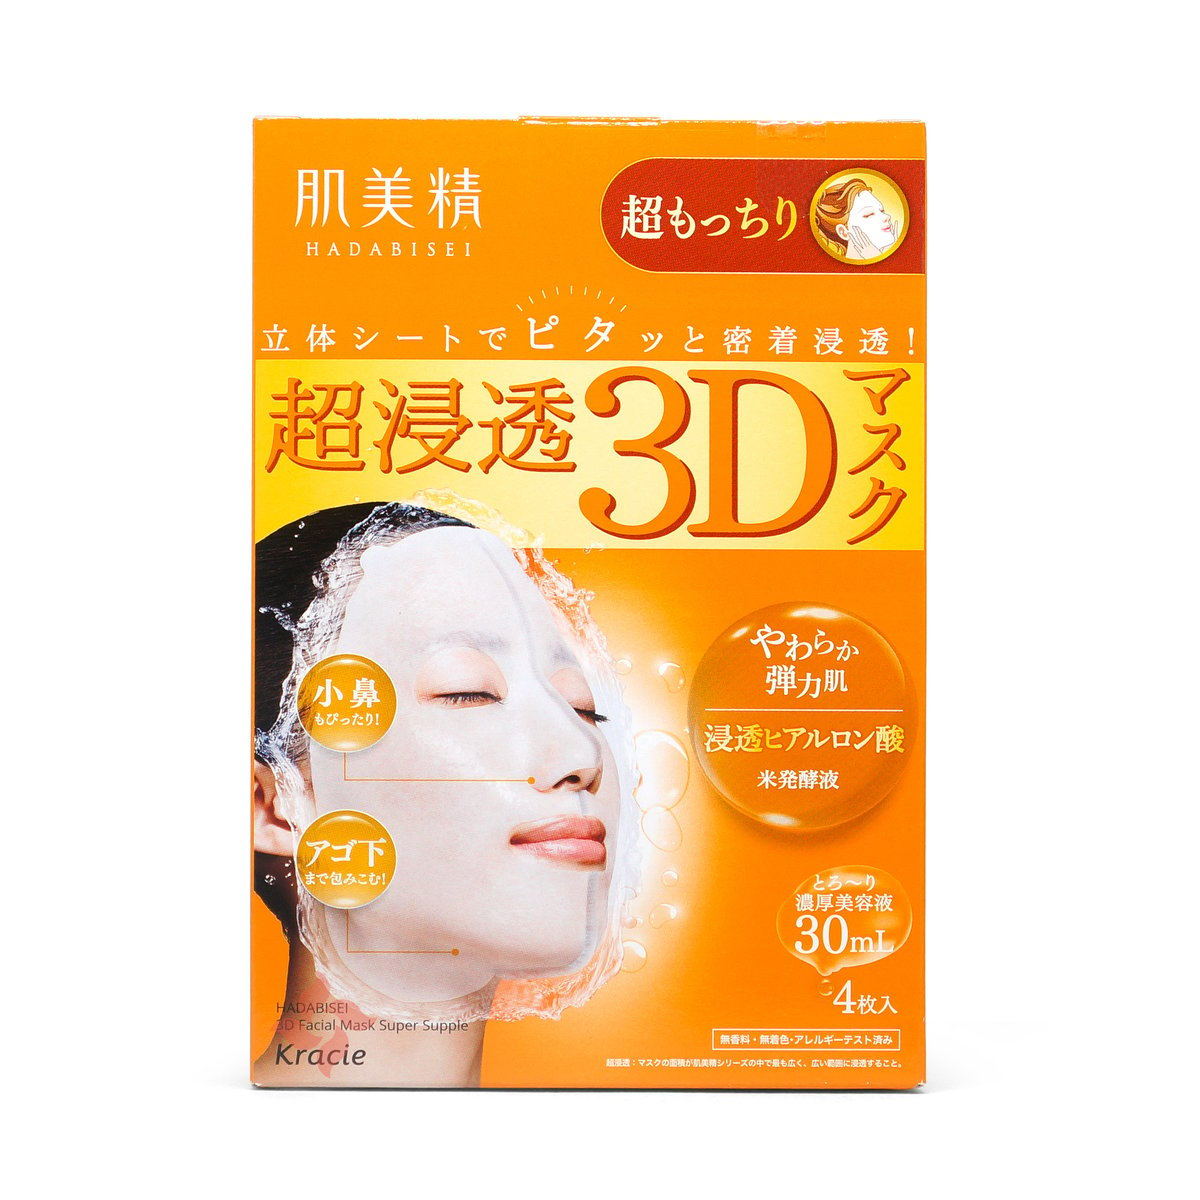 Kracie Hadabisei 3D Super Moisturizing Facial Mask, 4 sheets - Orange